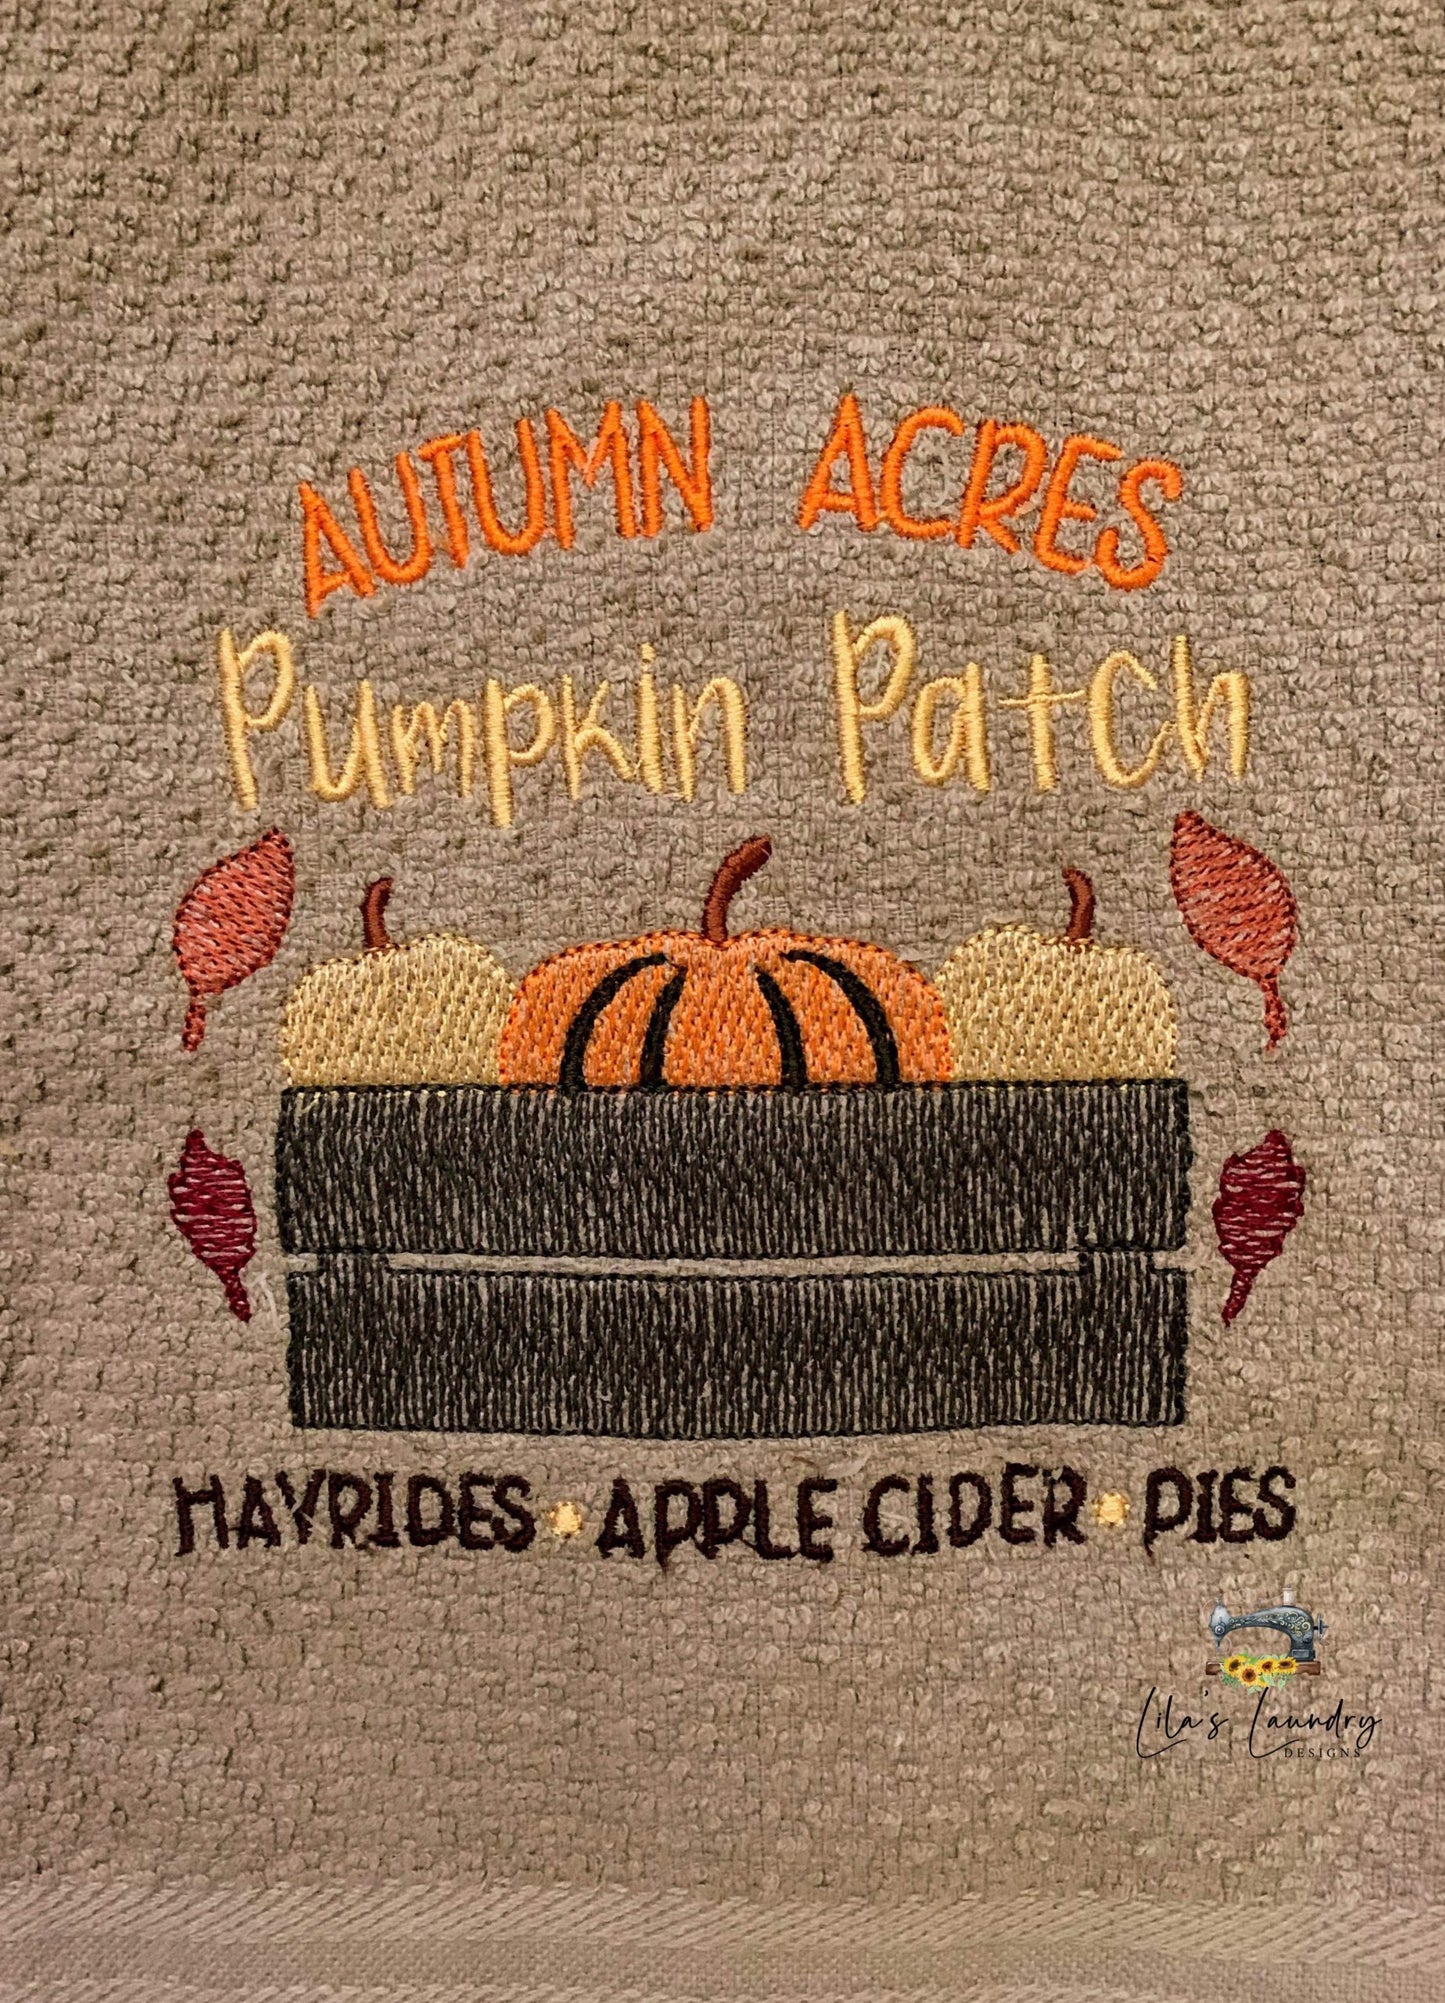 Autumn Acres - 3 sizes- Digital Embroidery Design